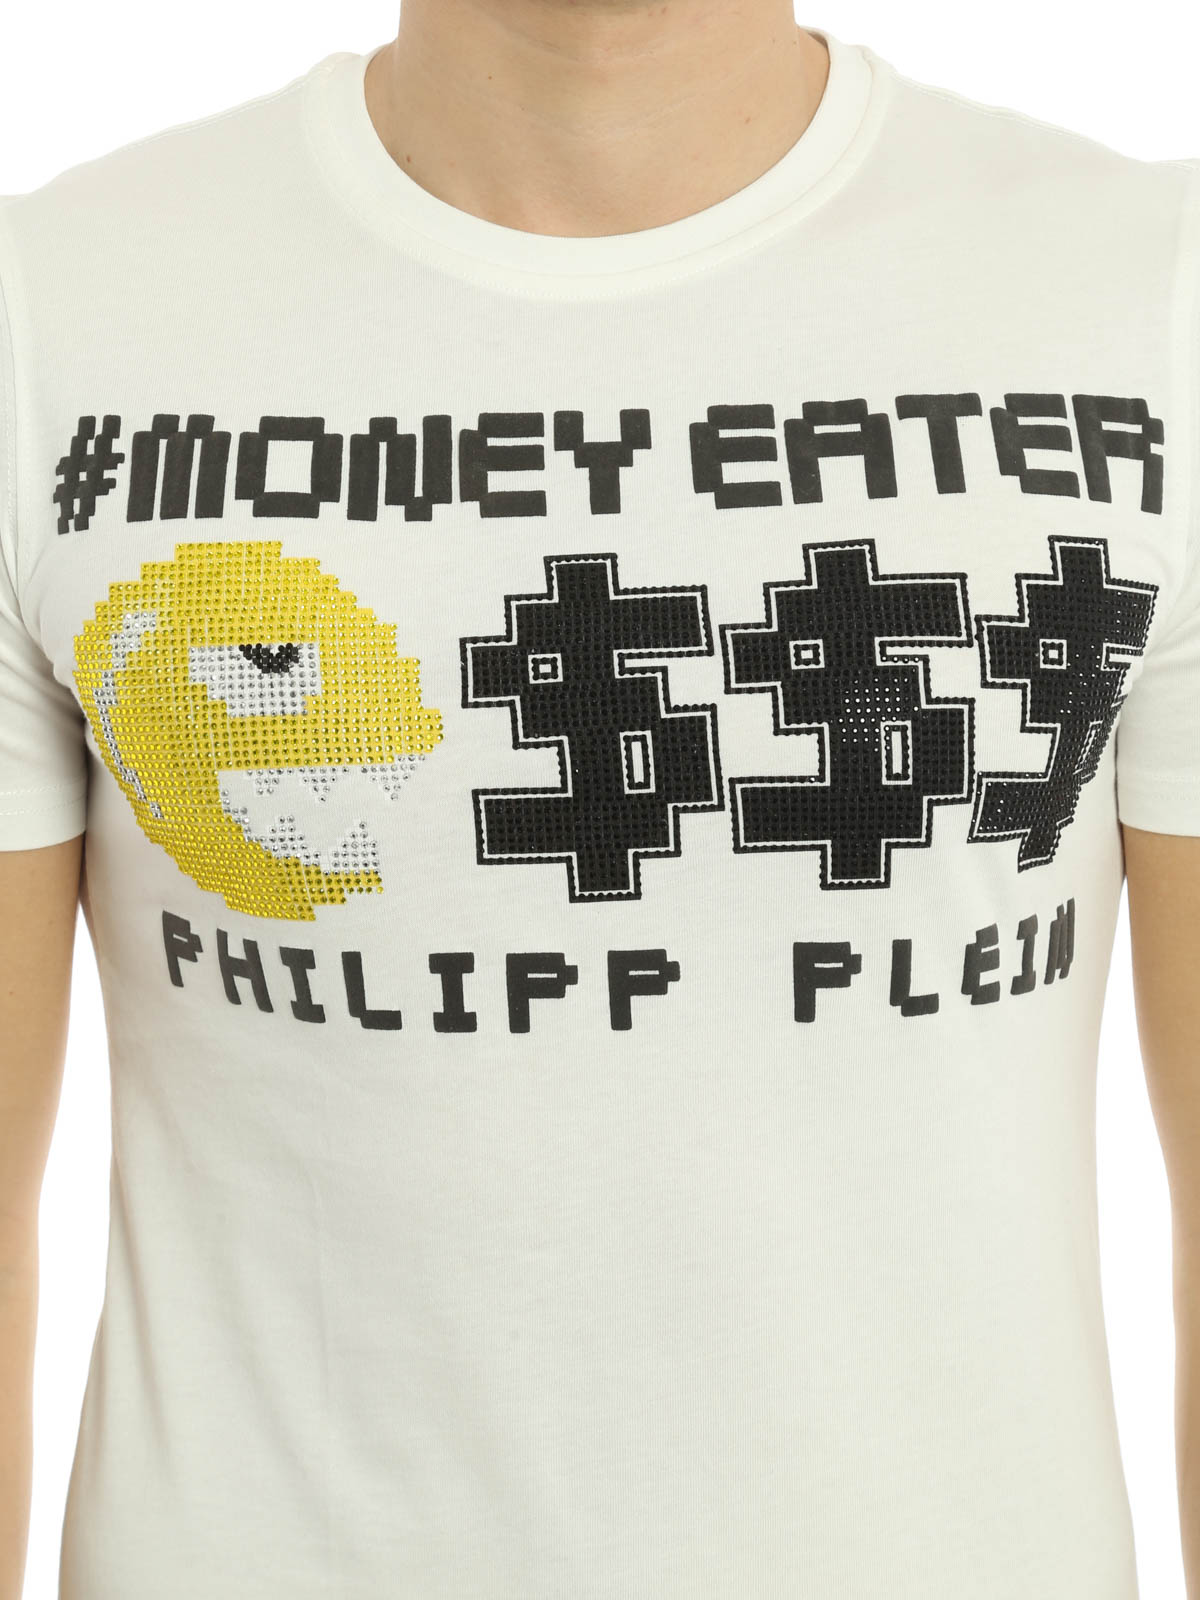 philipp plein money